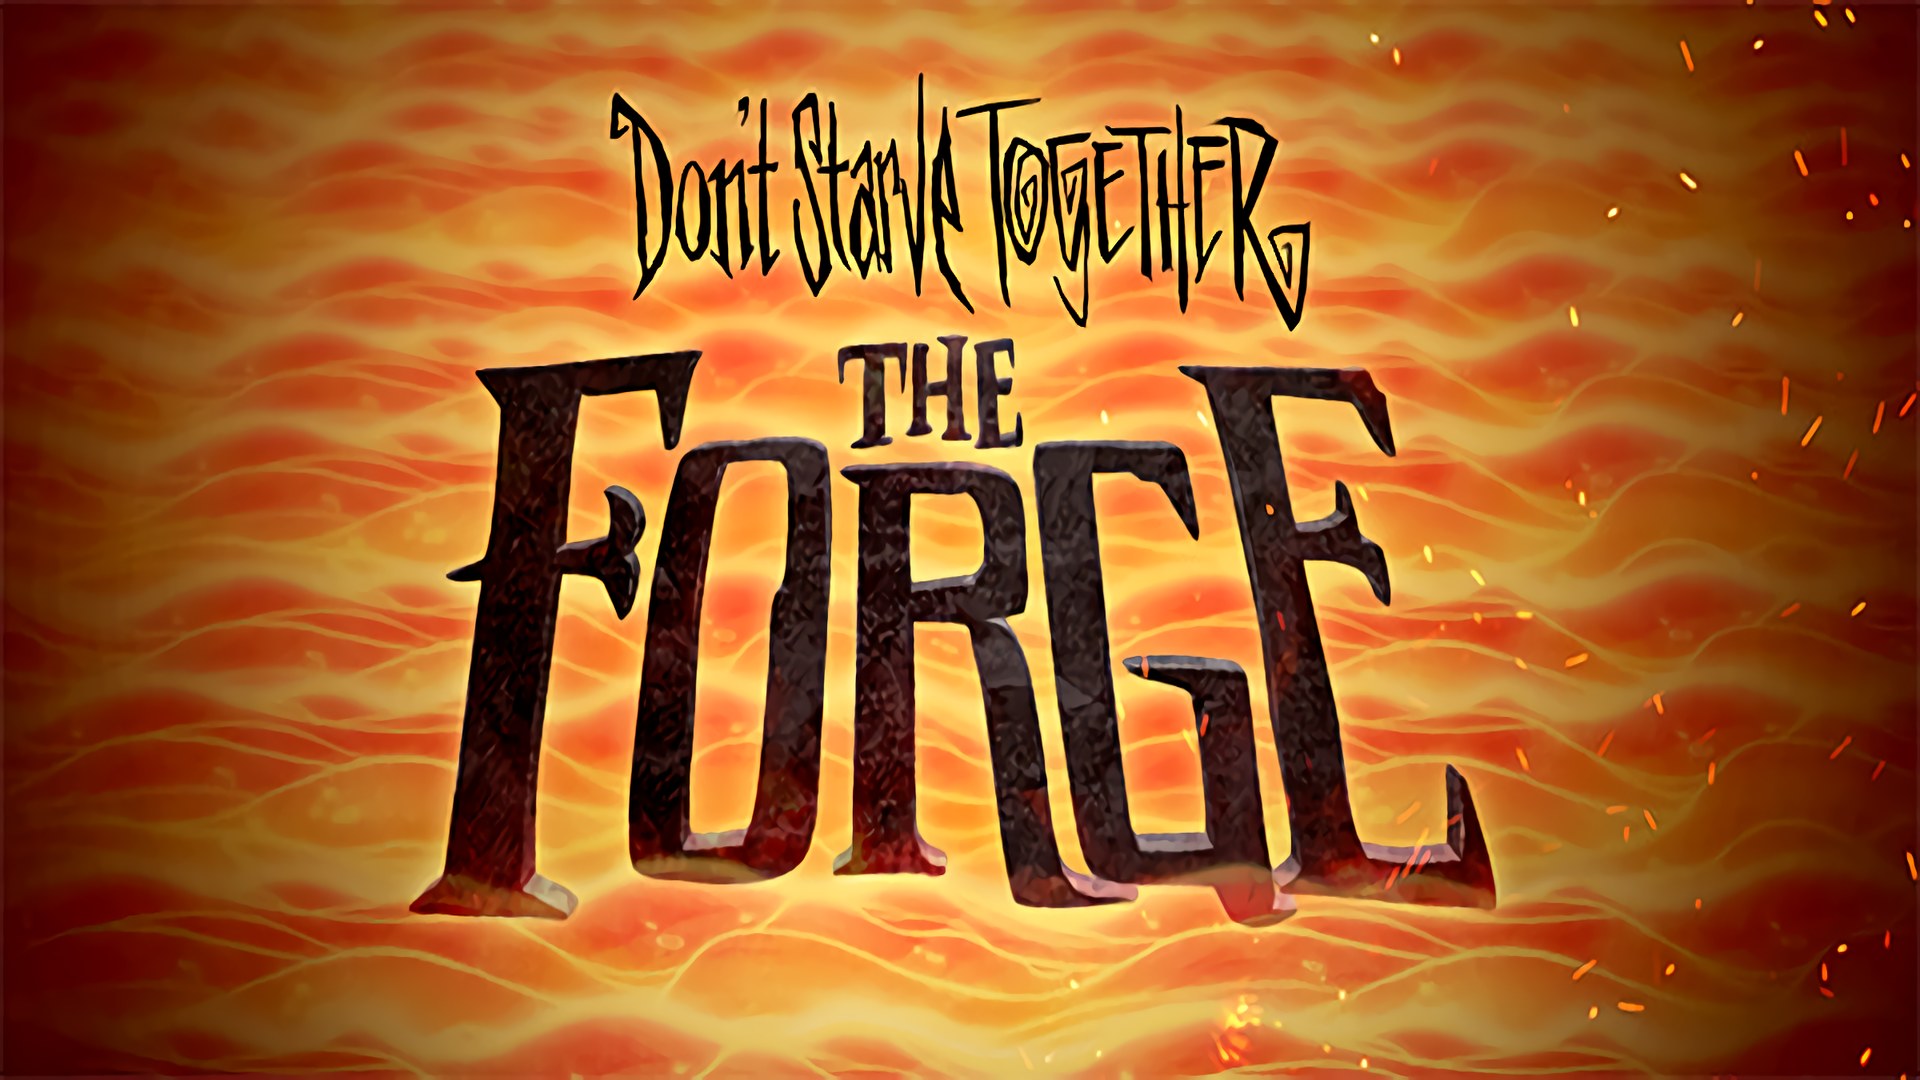 Don't Starve Together nhón nhận sự kiện The Forge - Tin Game